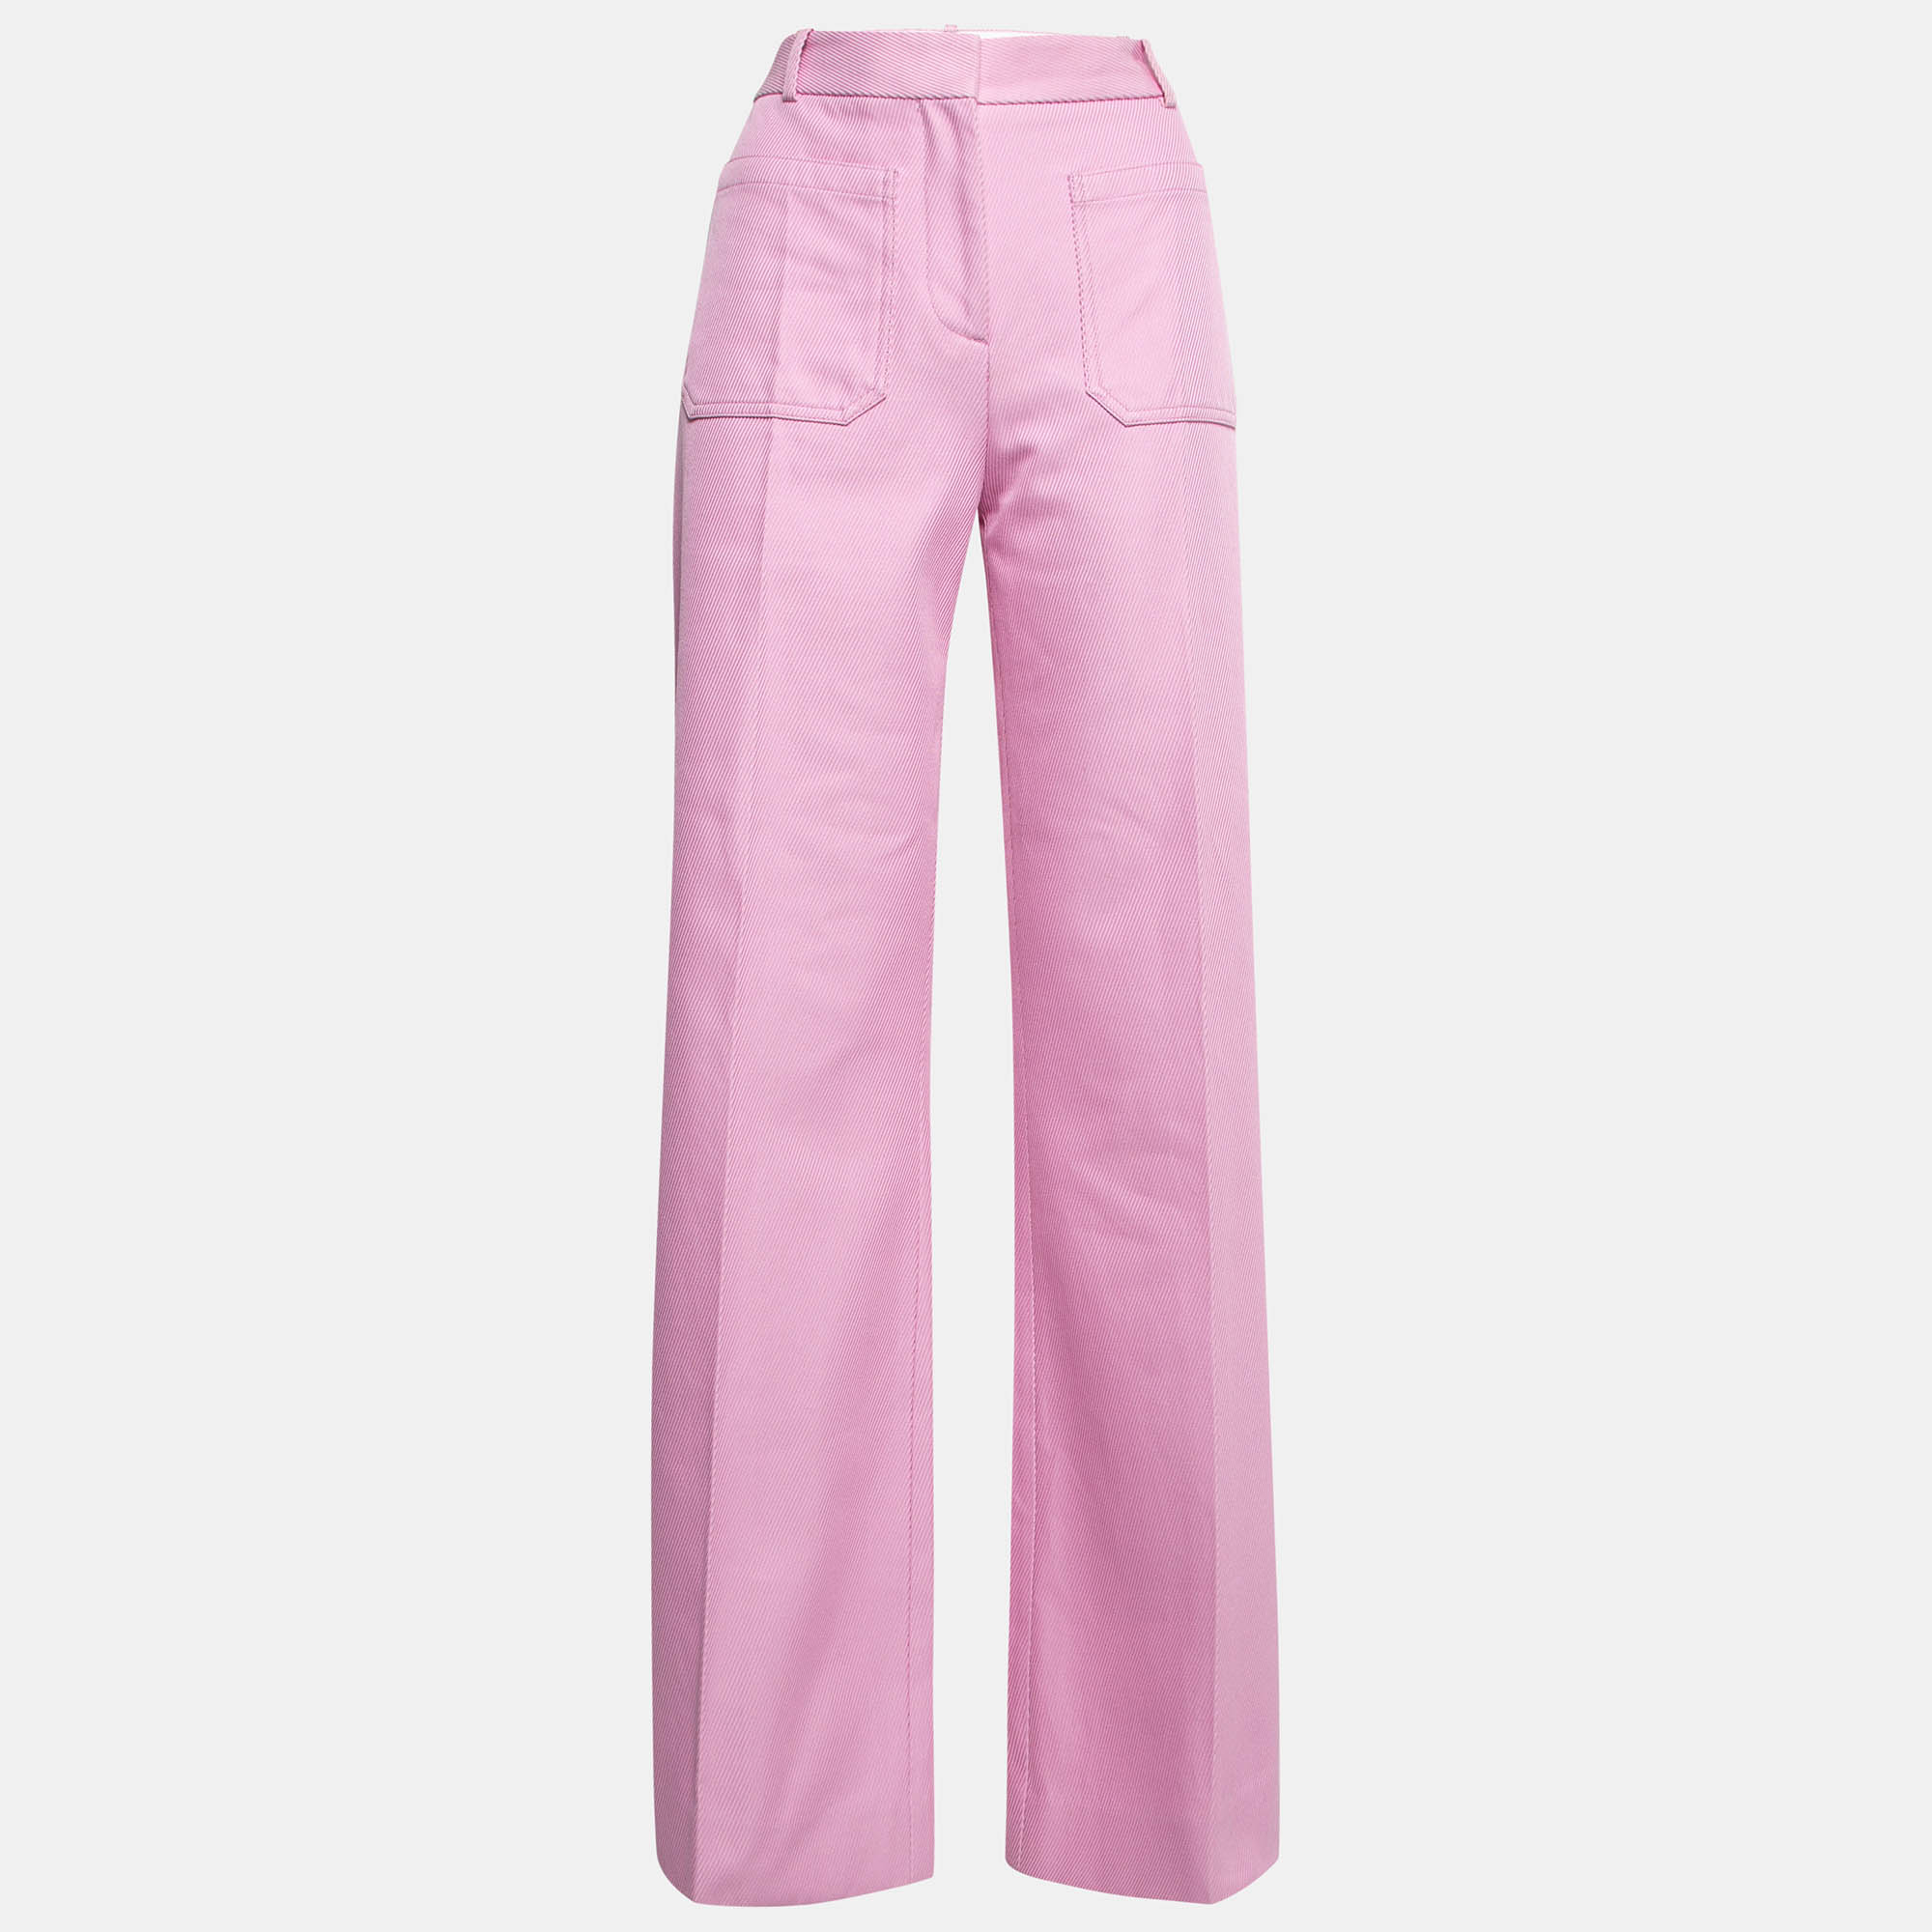 Victoria beckham pink jumbo twill alina trousers m